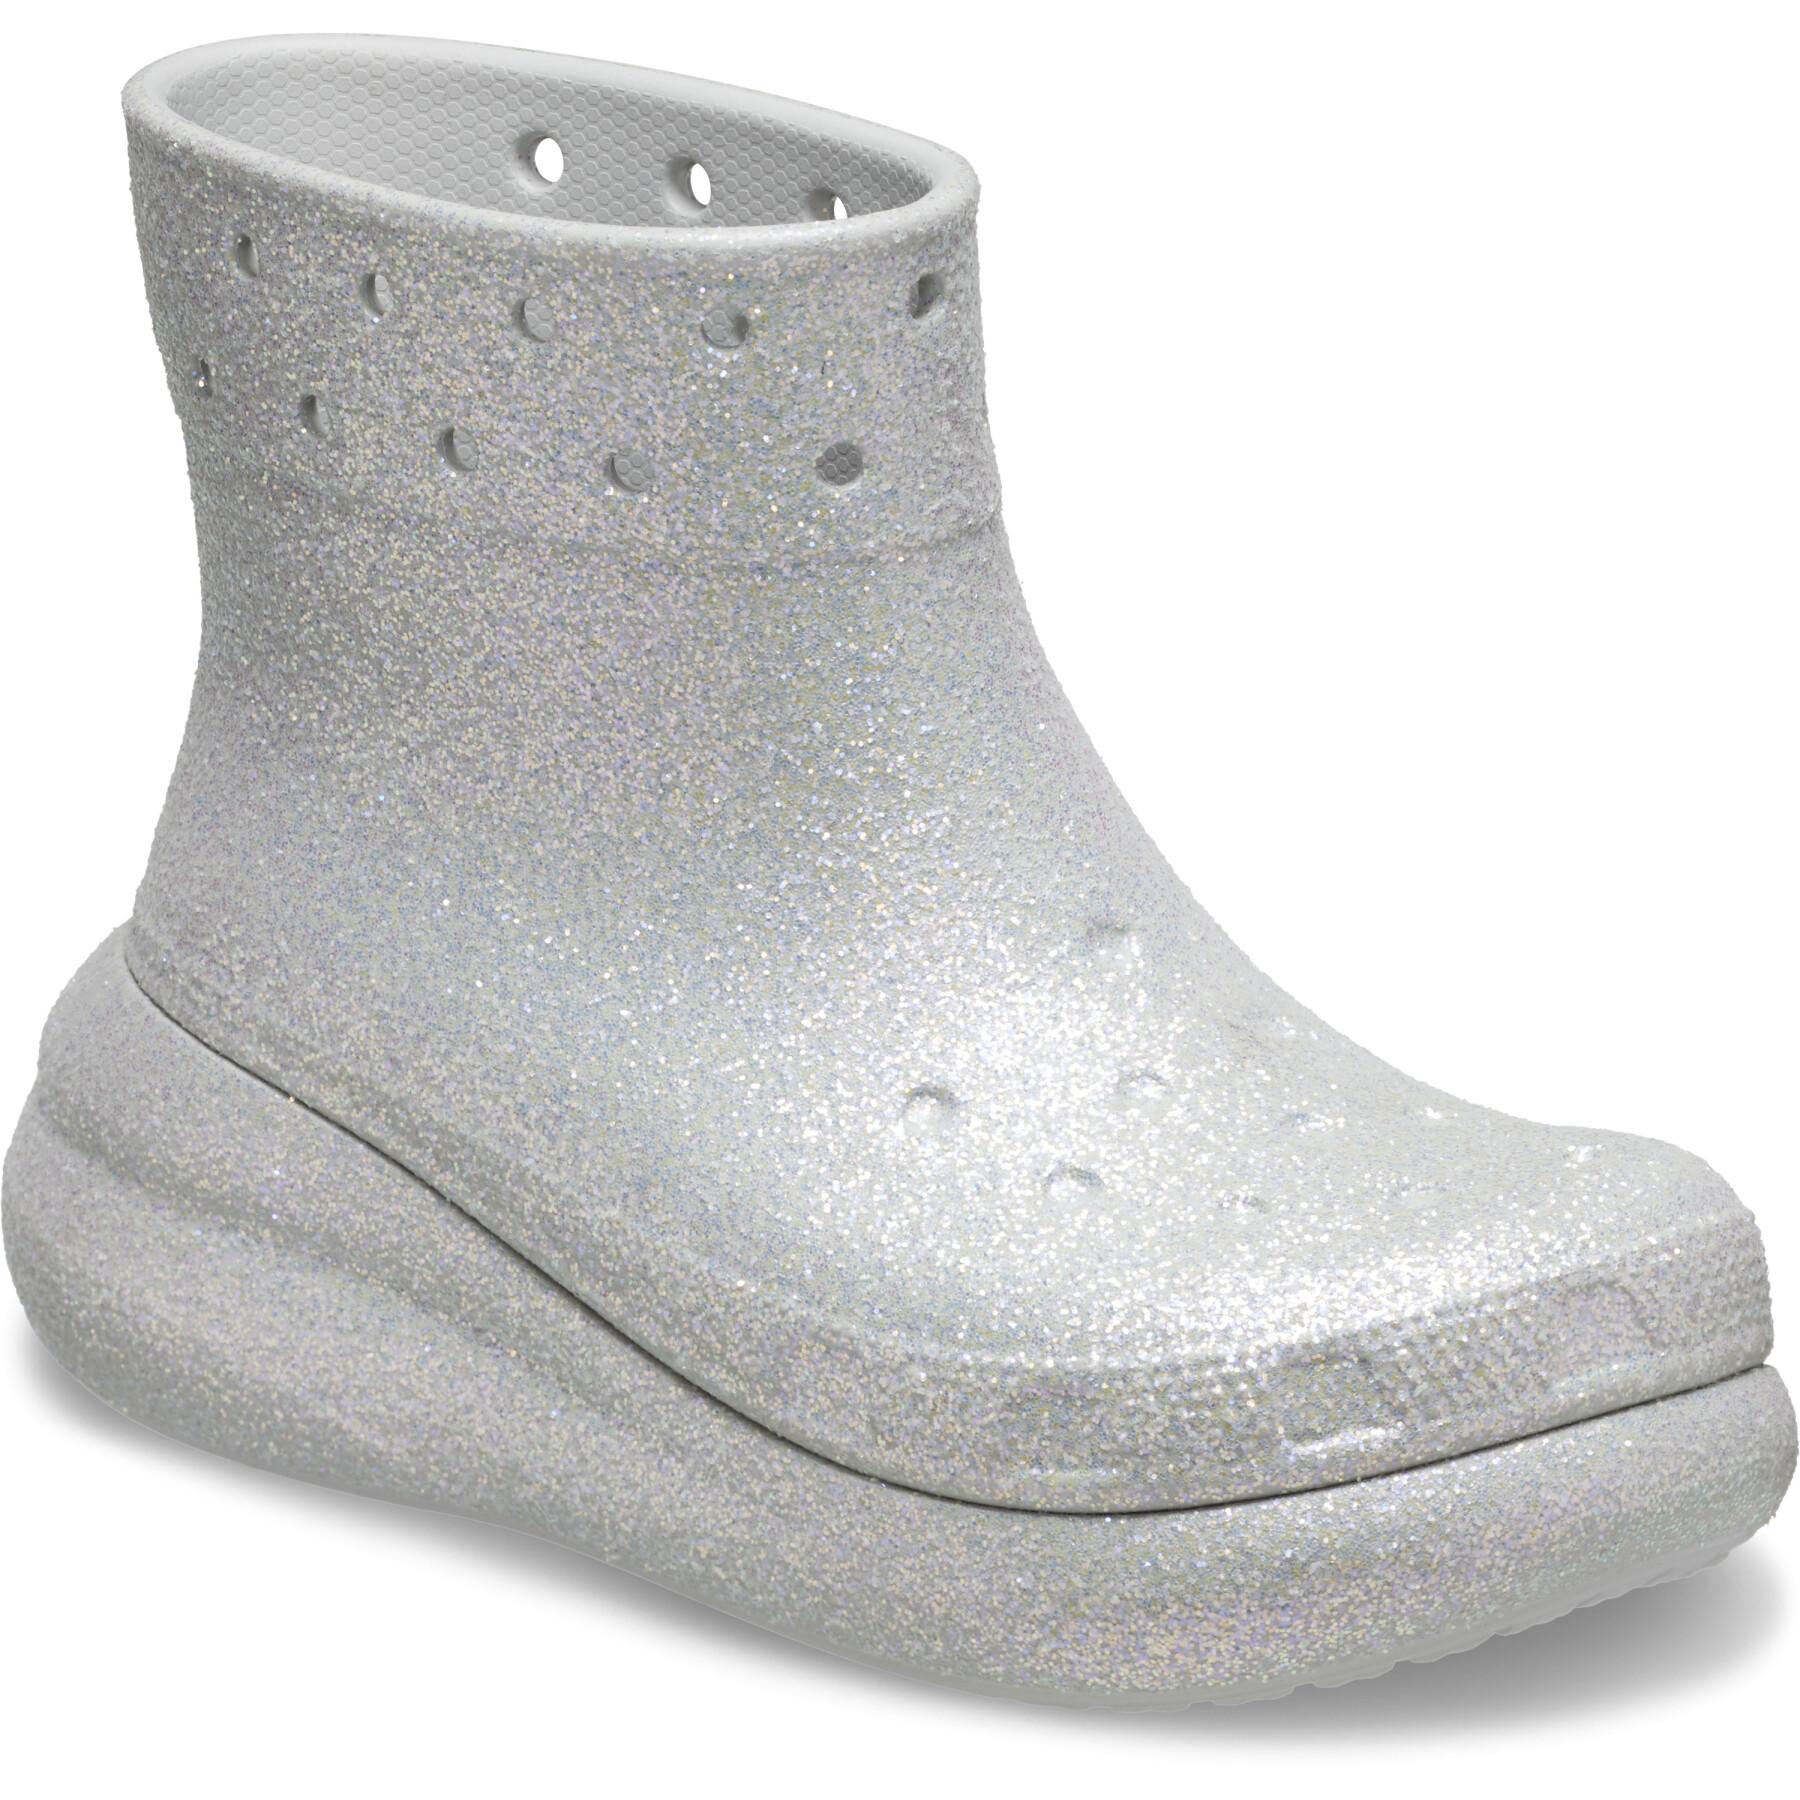 Children's boots Crocs Glitter